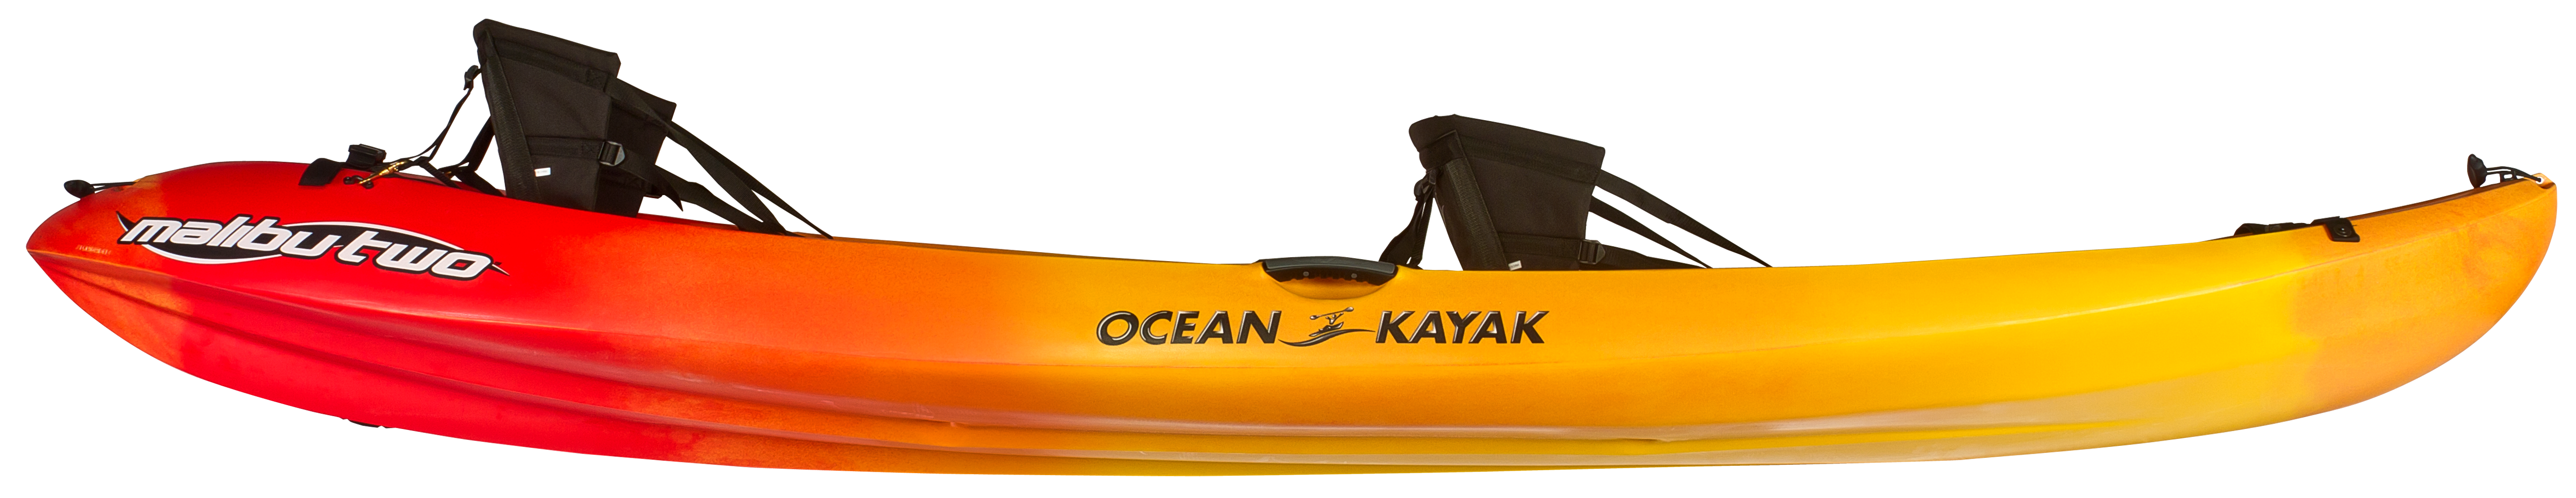 Ocean Kayak Malibu Two Sunrise